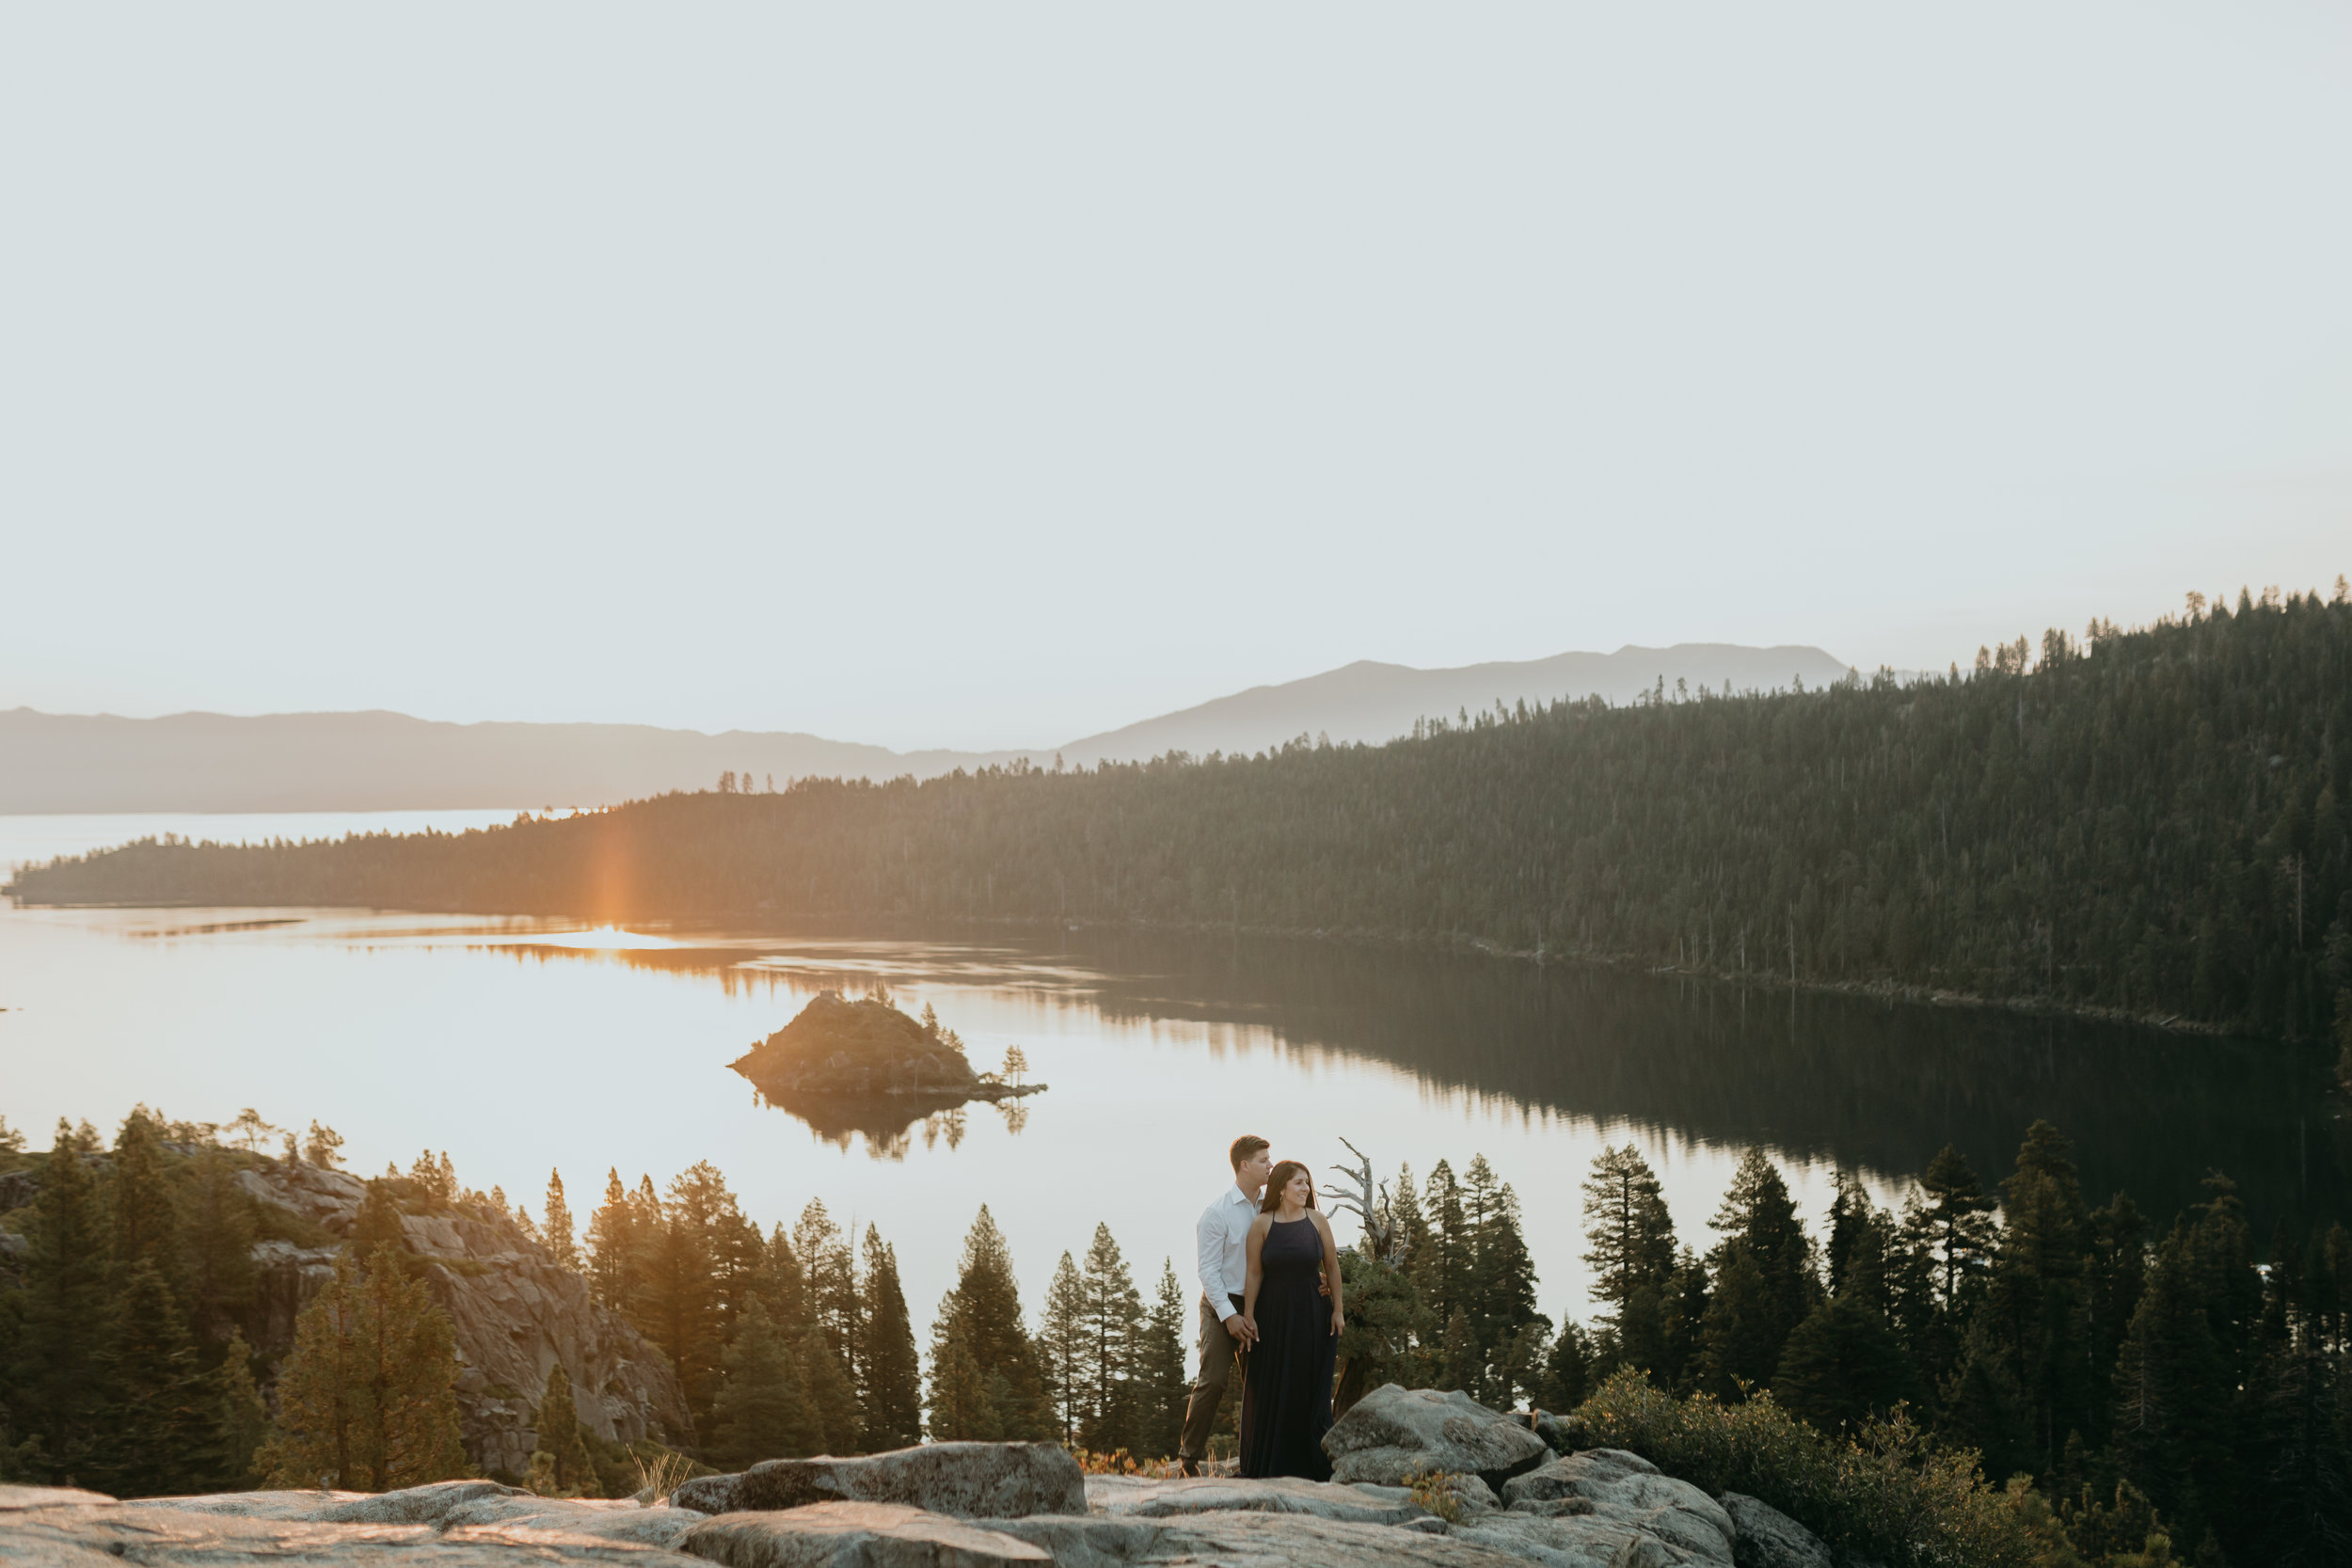 nicole-daacke-photography-lake-tahoe-sunrise-summer-adventure-engagement-photos-nevada-wedding-elopement-photographer-golden-emerald-bay-light-pine-trees-summer-vibe-fun-carefree-authentic-love-18.jpg